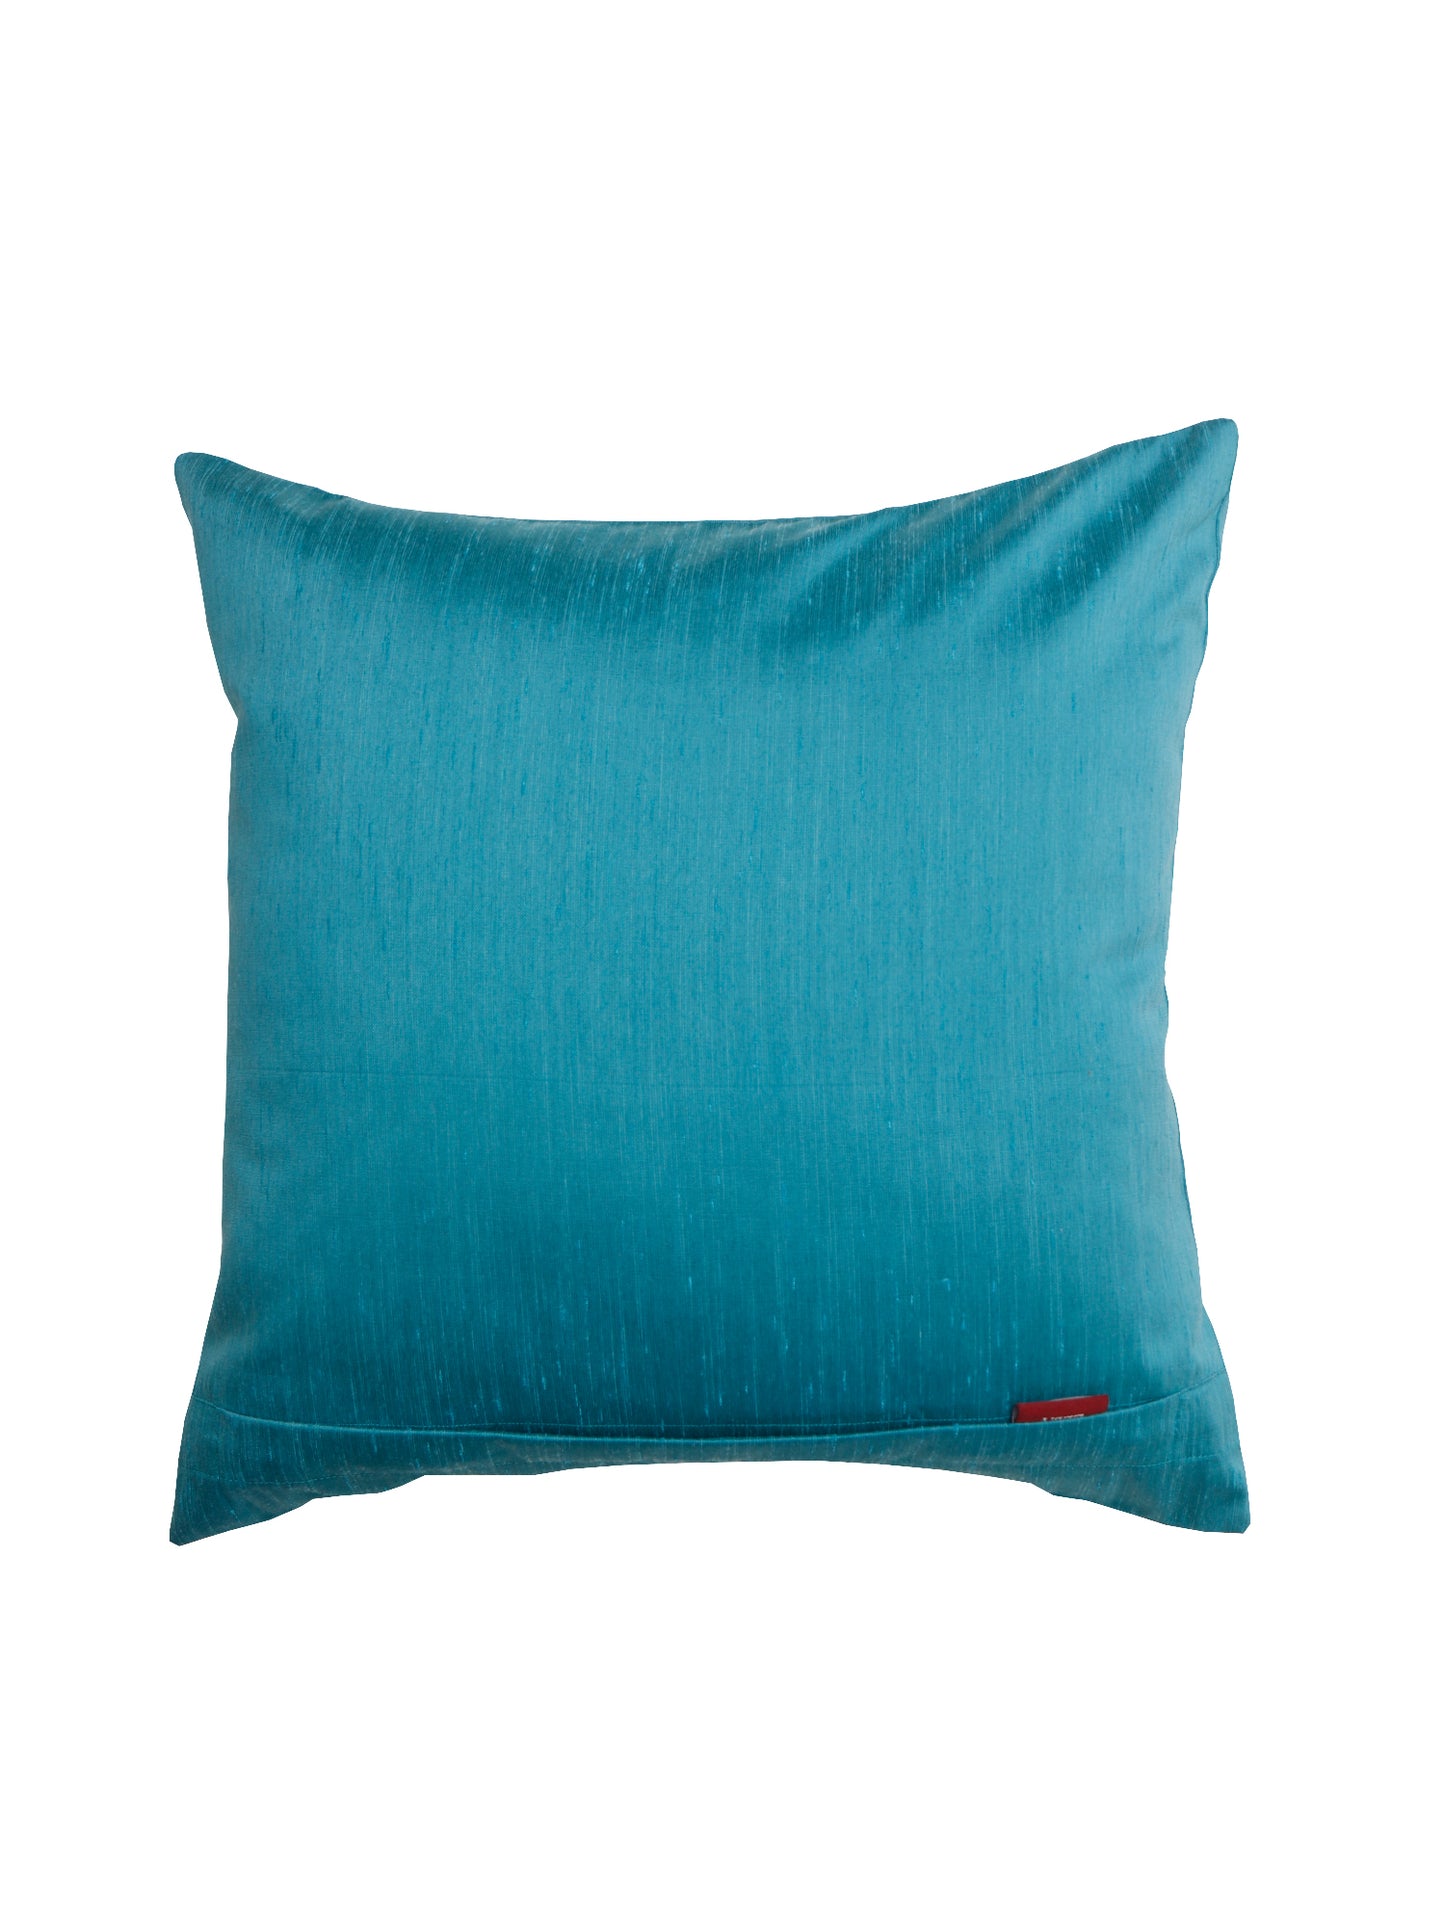 Cushion Cover Tassles Polyester Blend Blue - 16" x 16"